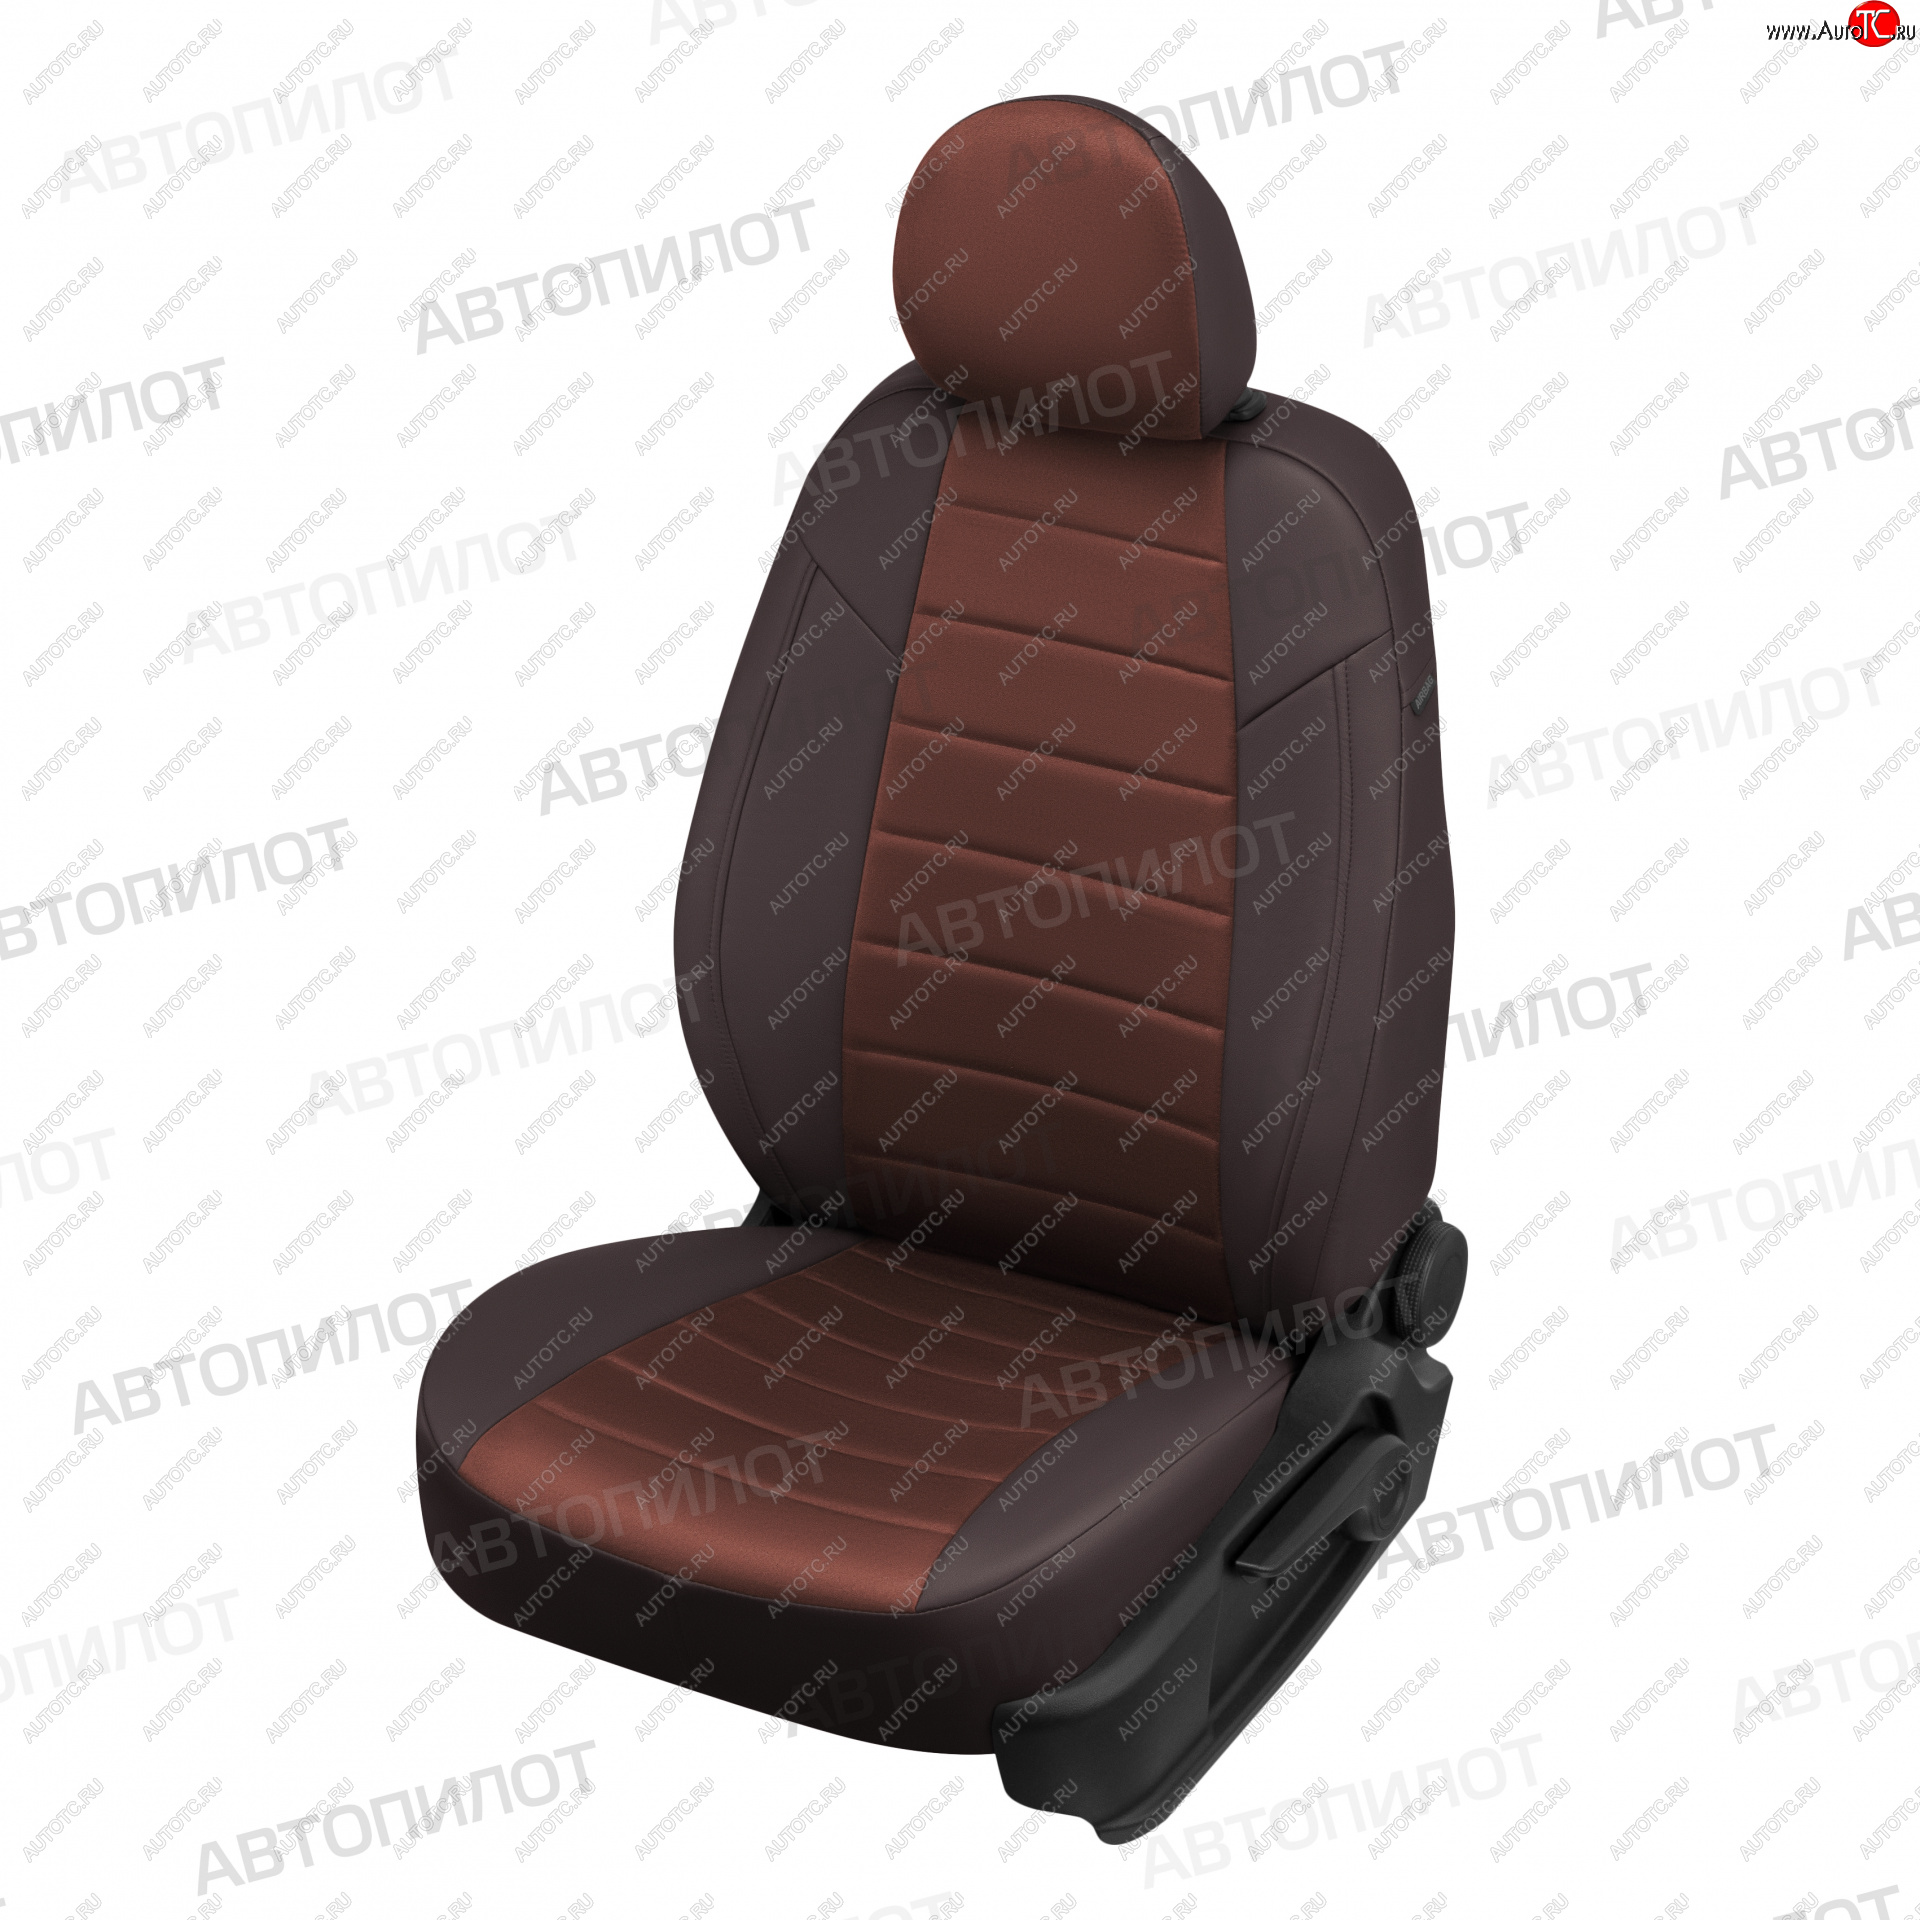 13 449 р. Чехлы сидений (экокожа/алькантара) Автопилот  Ford Mondeo (2007-2014) (шоколад)